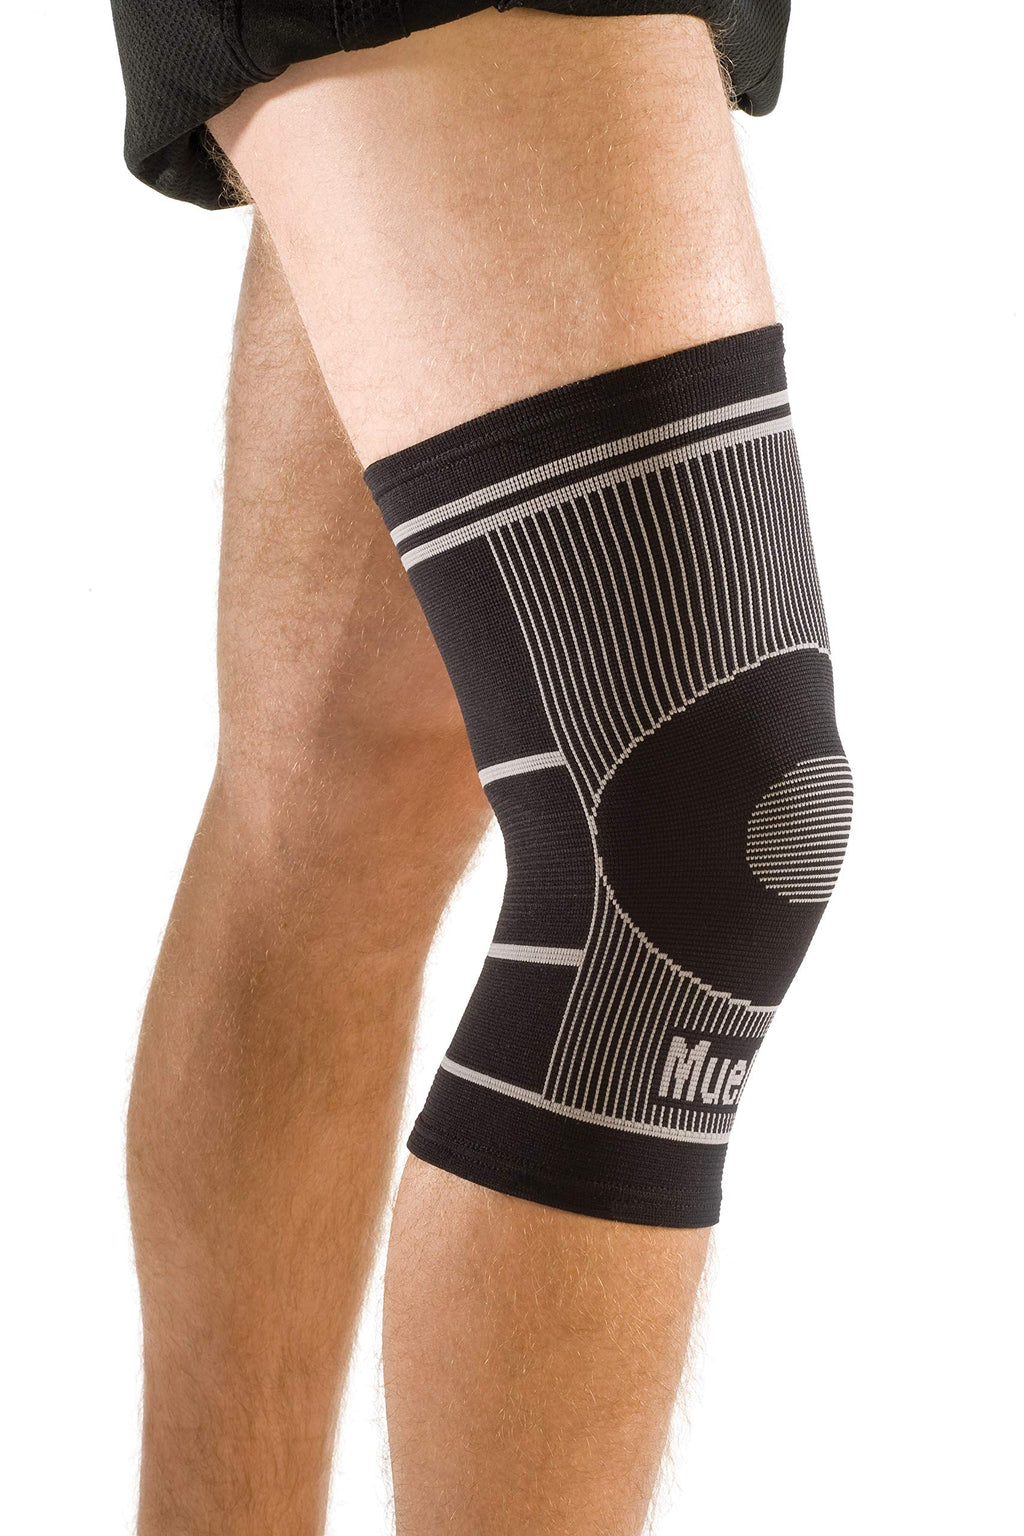 [Australia] - Mueller Sports Medicine 4-Way Stretch Knee Support Sleeve, For Men and Women, Black, S/M 